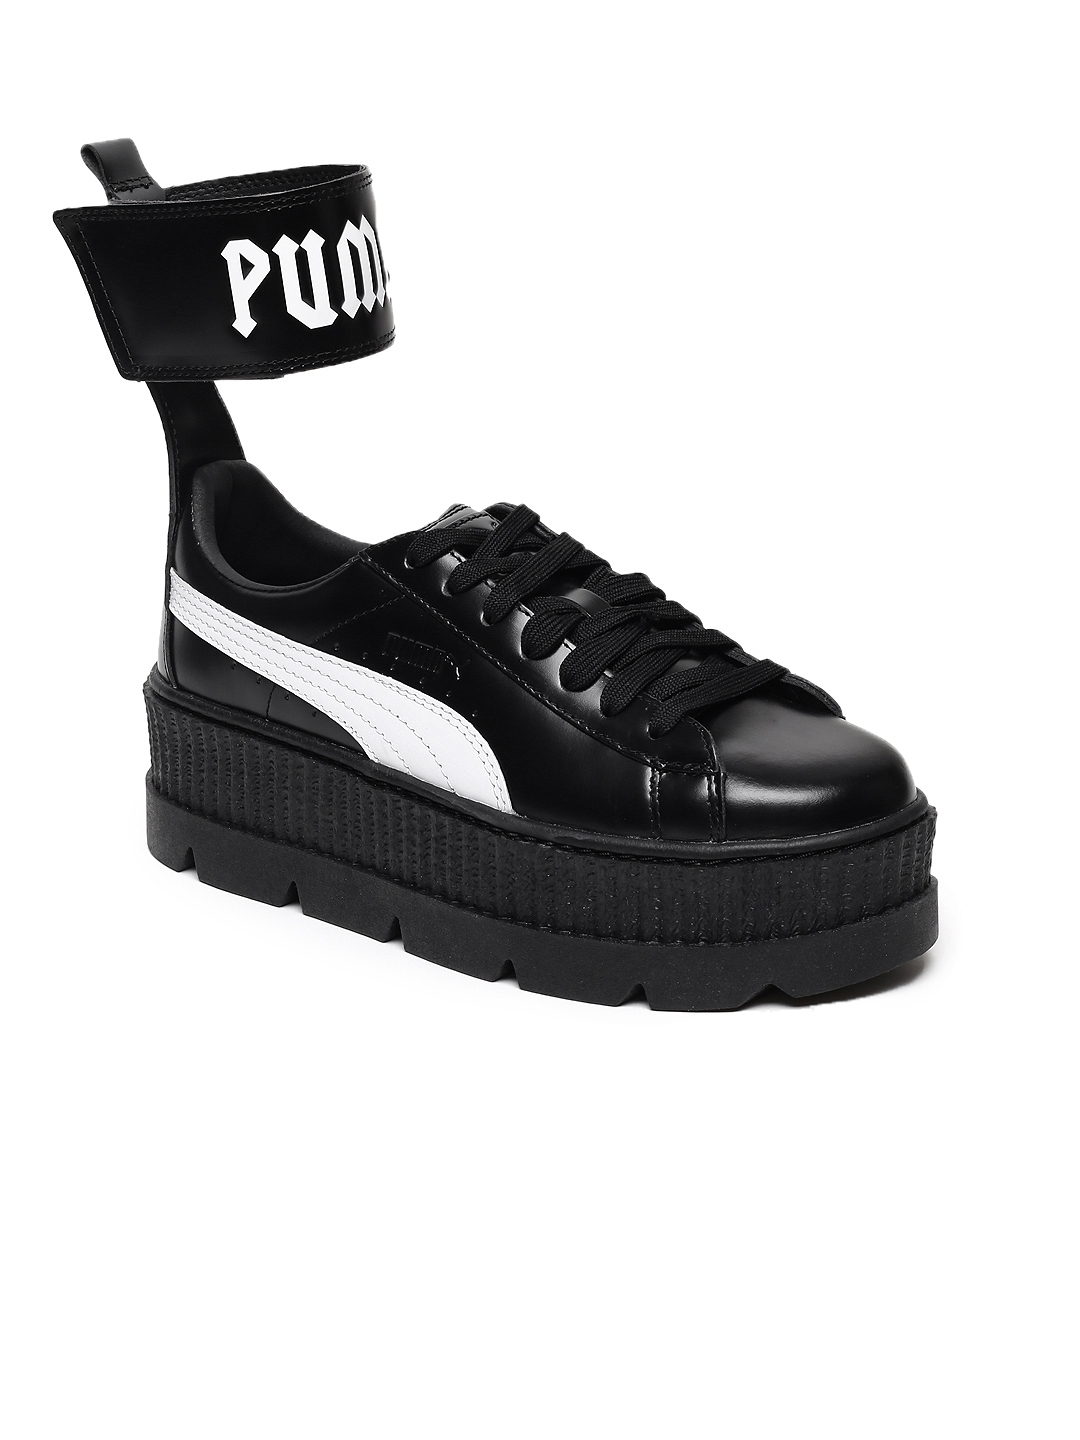 puma high top sneakers womens